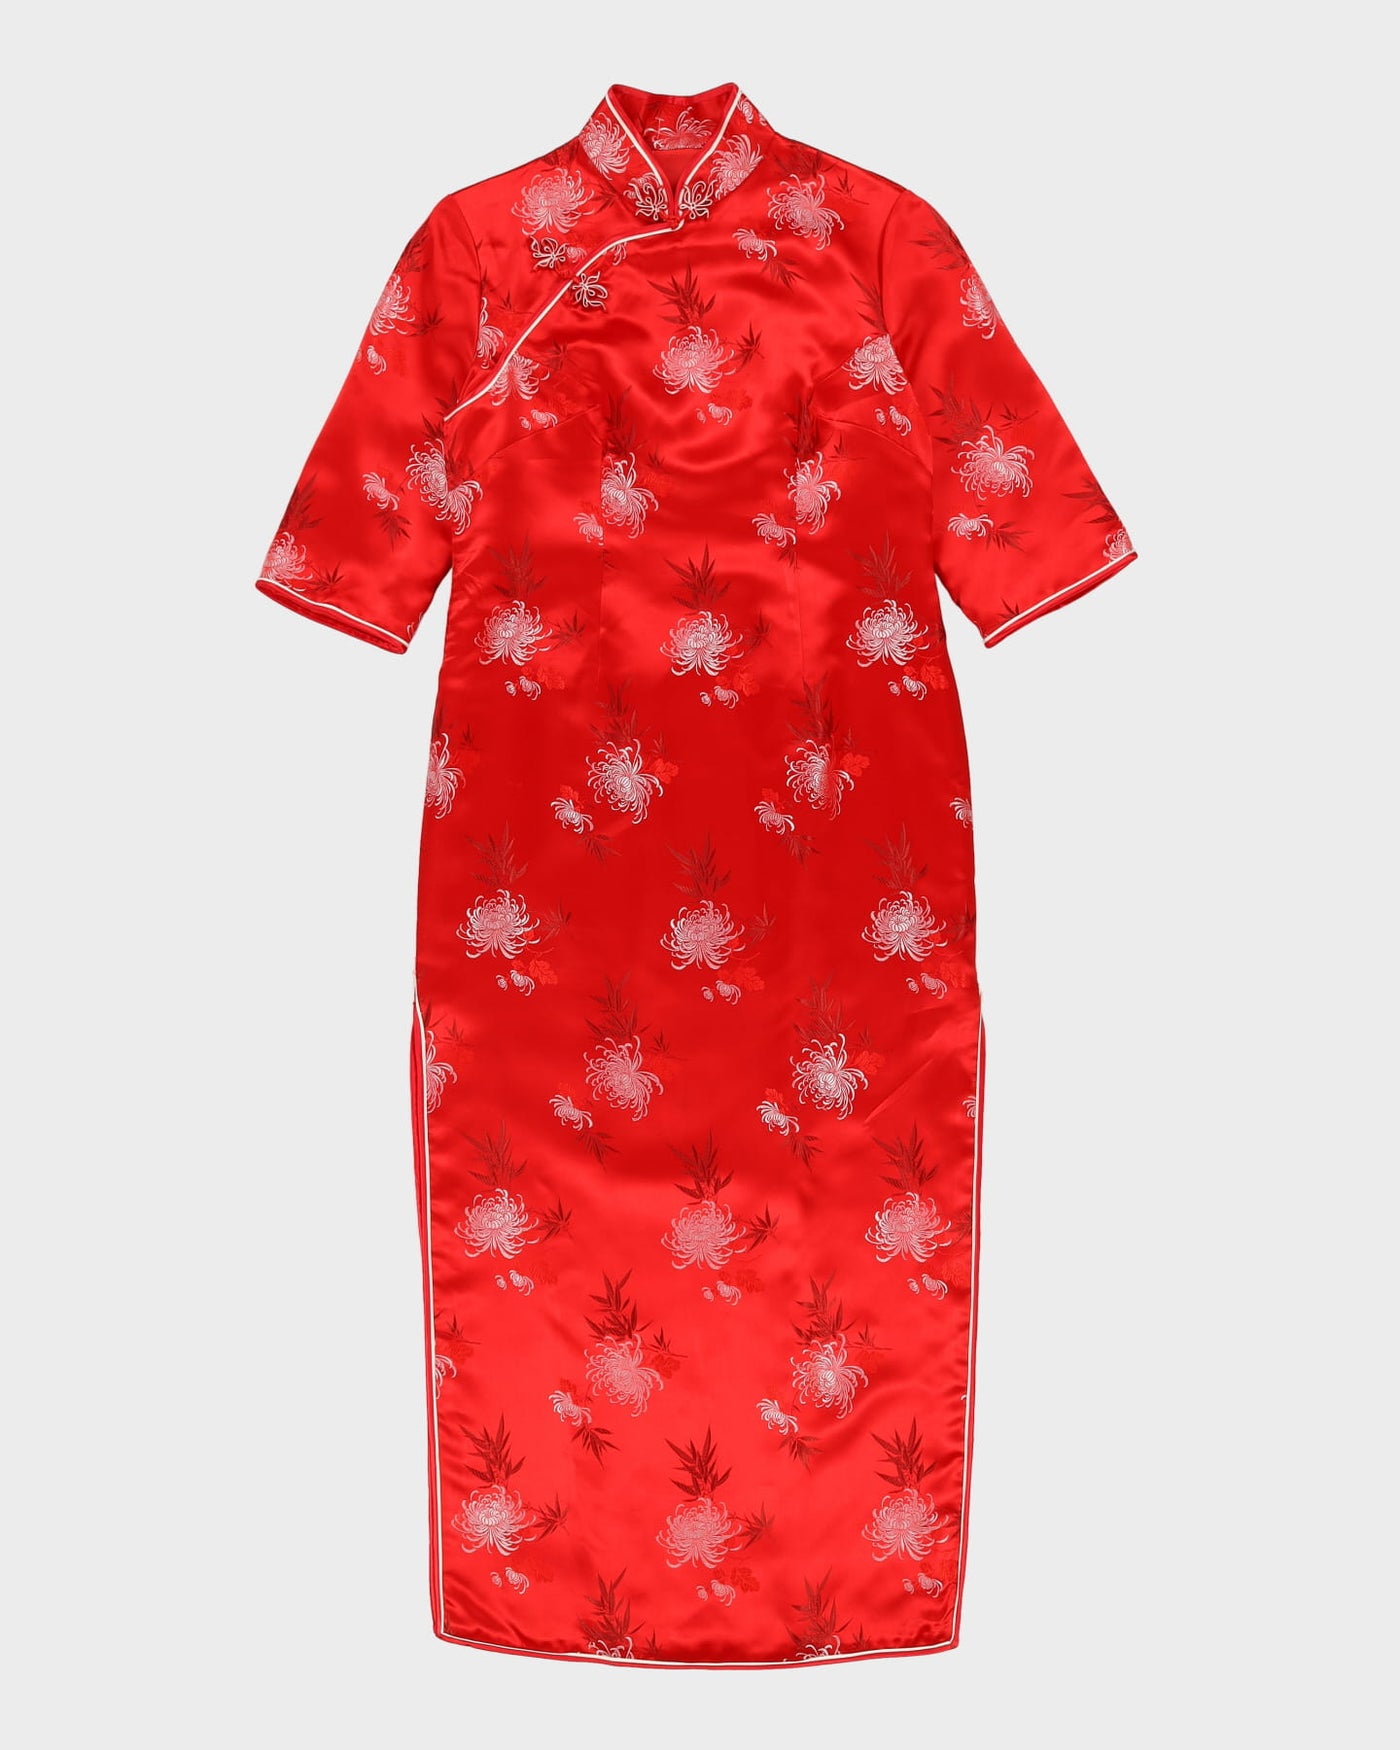 Red Brocade Cheongsam Dress - S